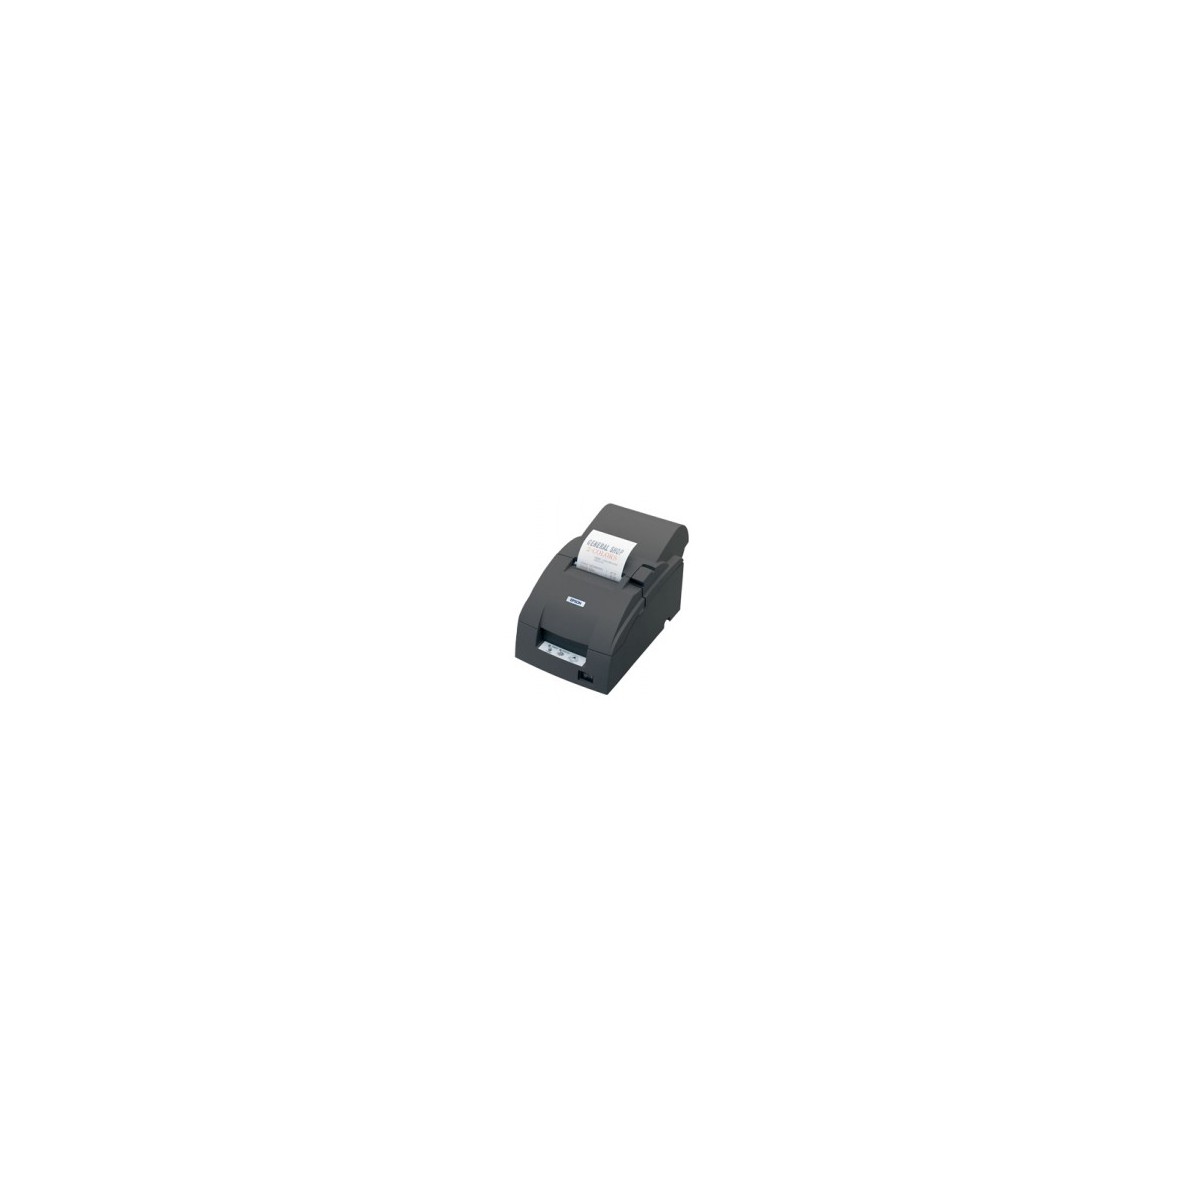 Epson TM-U220A (057): Serial - PS - EDG - Dot matrix - POS printer - 0.06-0.085 µm - 4.2 cm - Wired - 180000 h